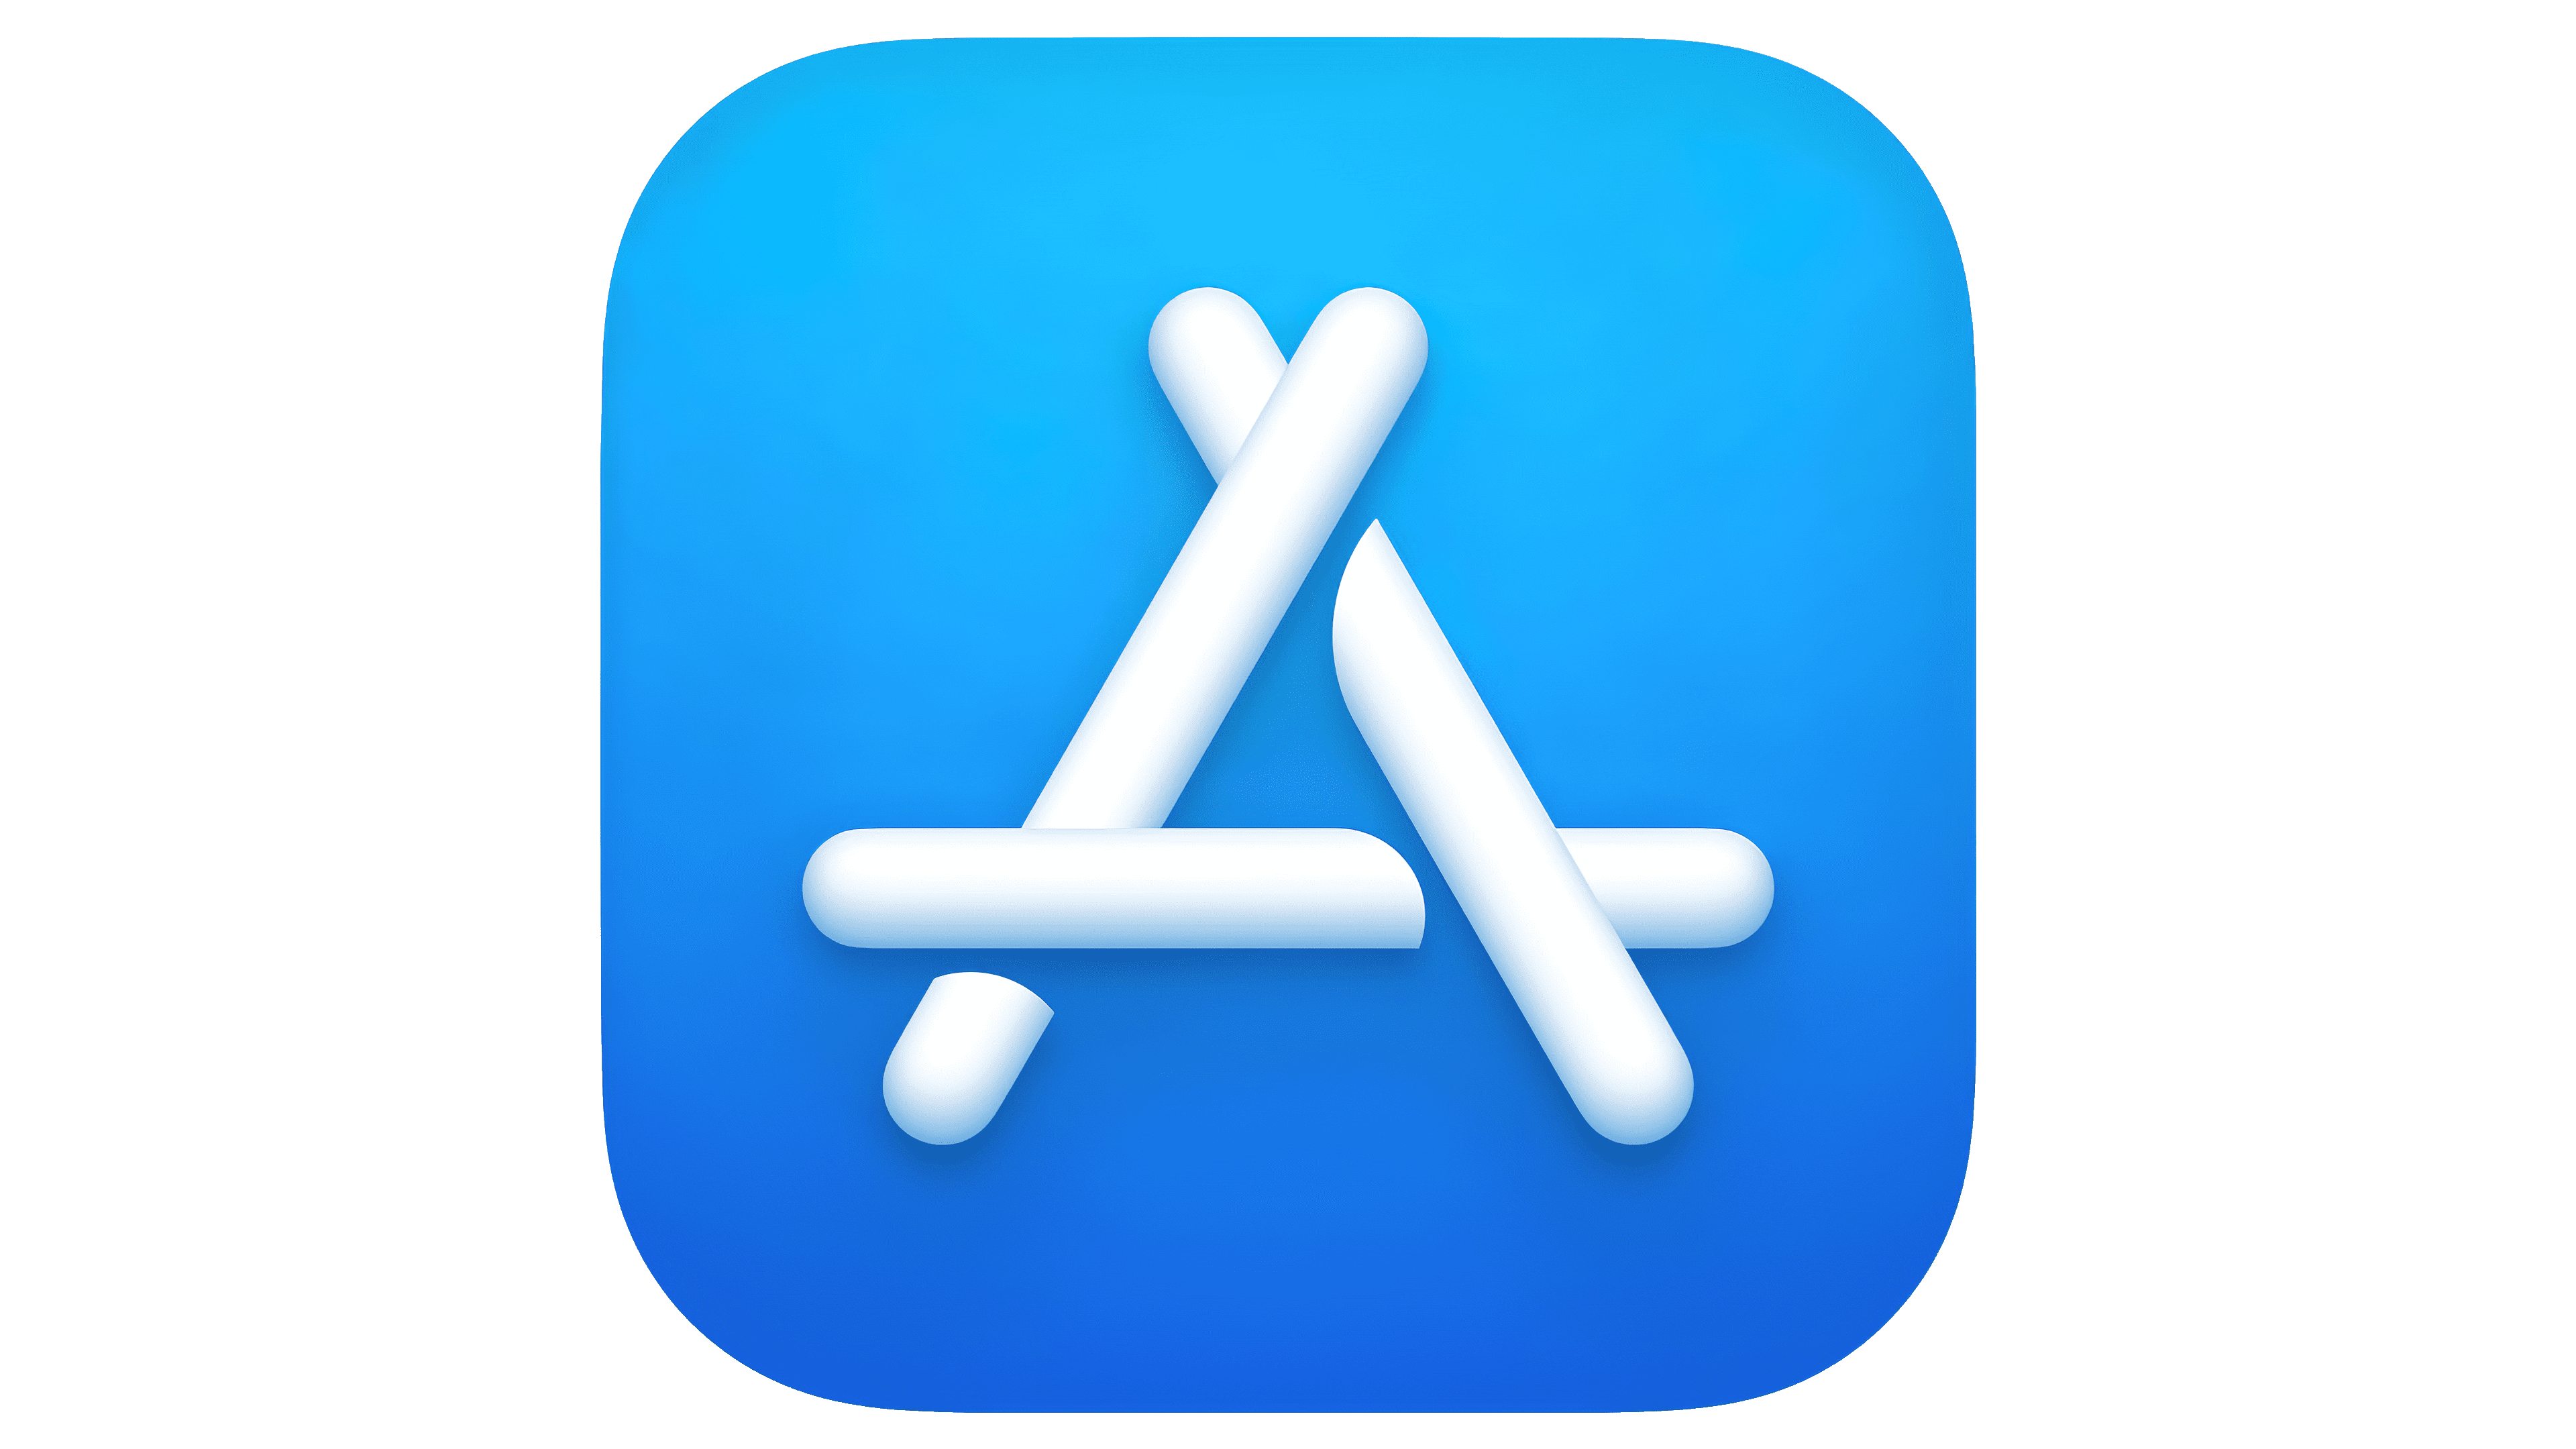 Ãpp Studio: The App Builder on the App Store